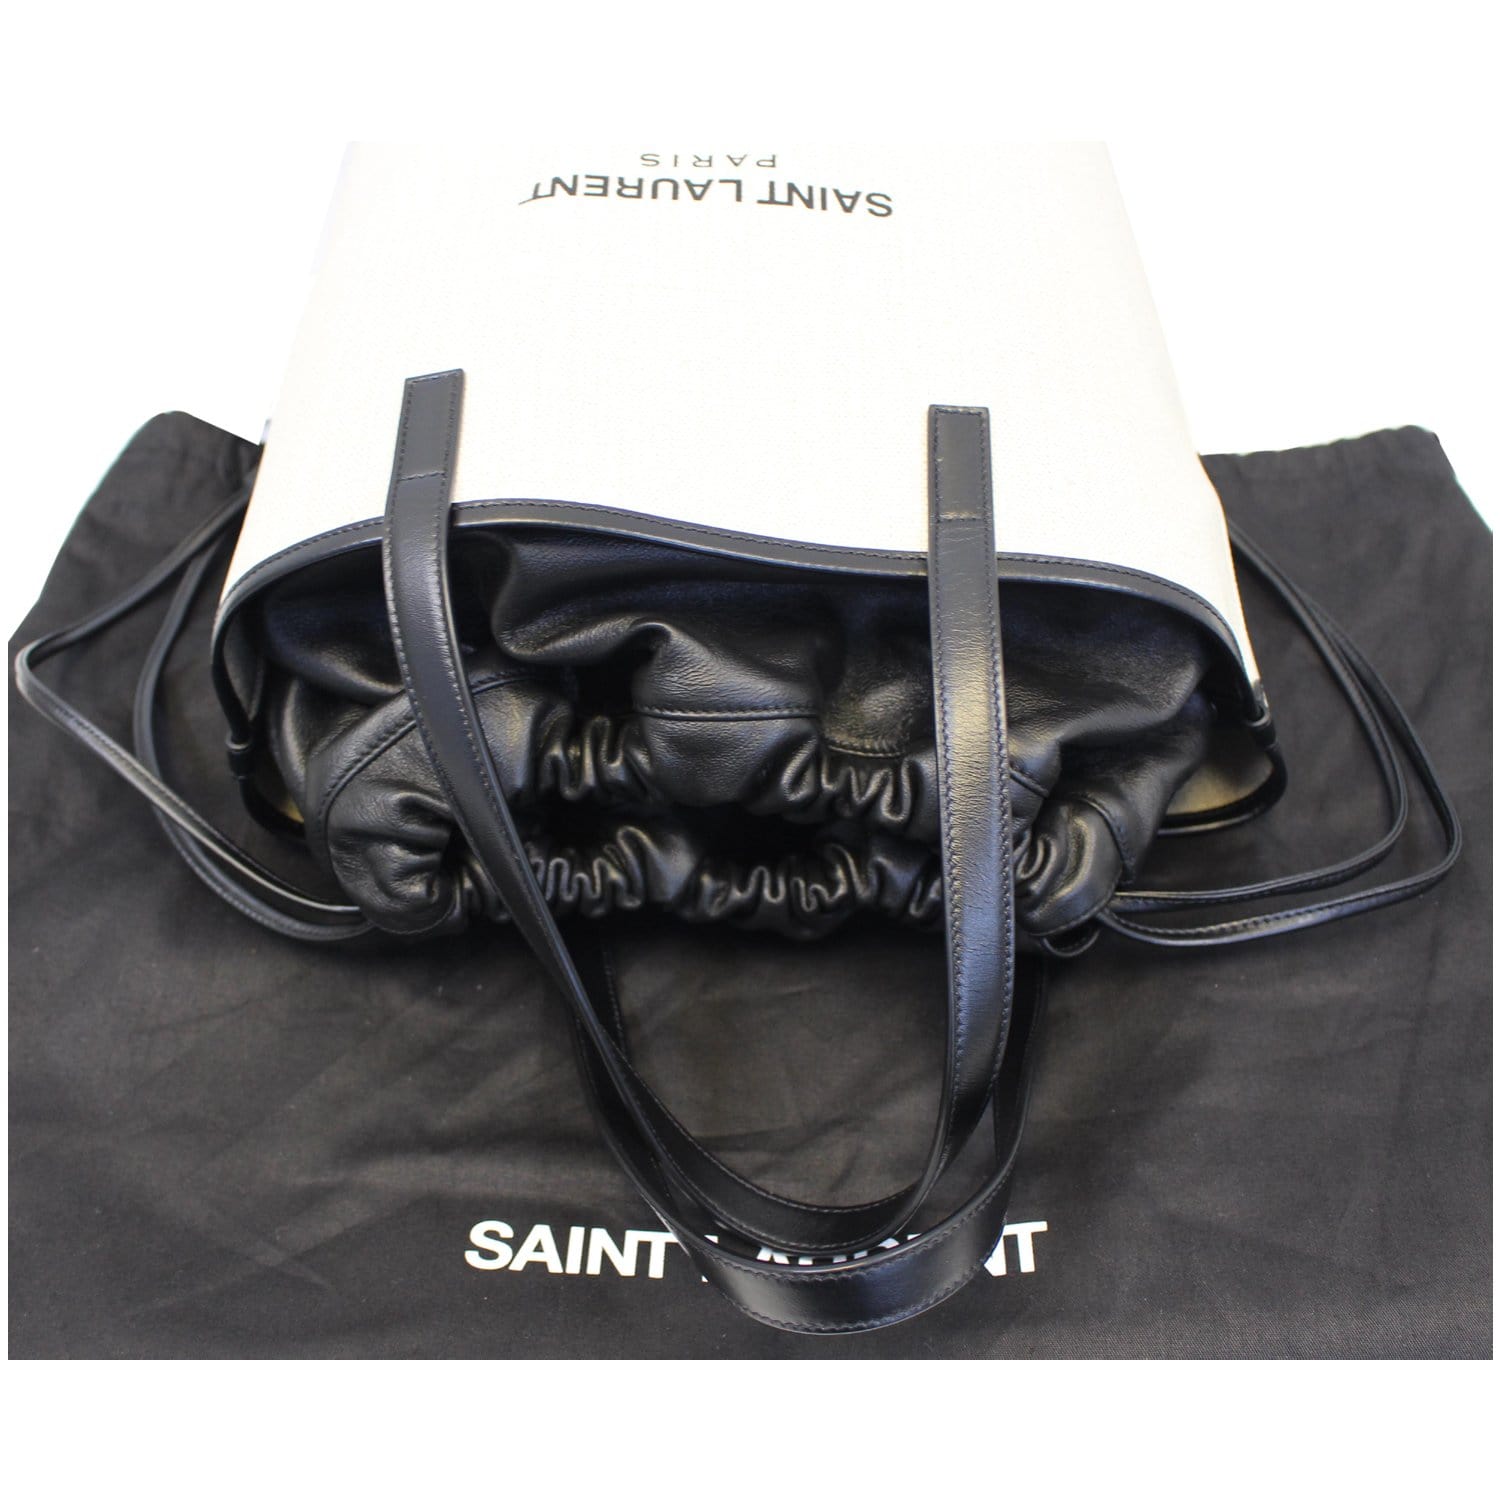 Saint Laurent Paris Tote Bag 551595 Teddy Tote Canvas/Leather White Women used